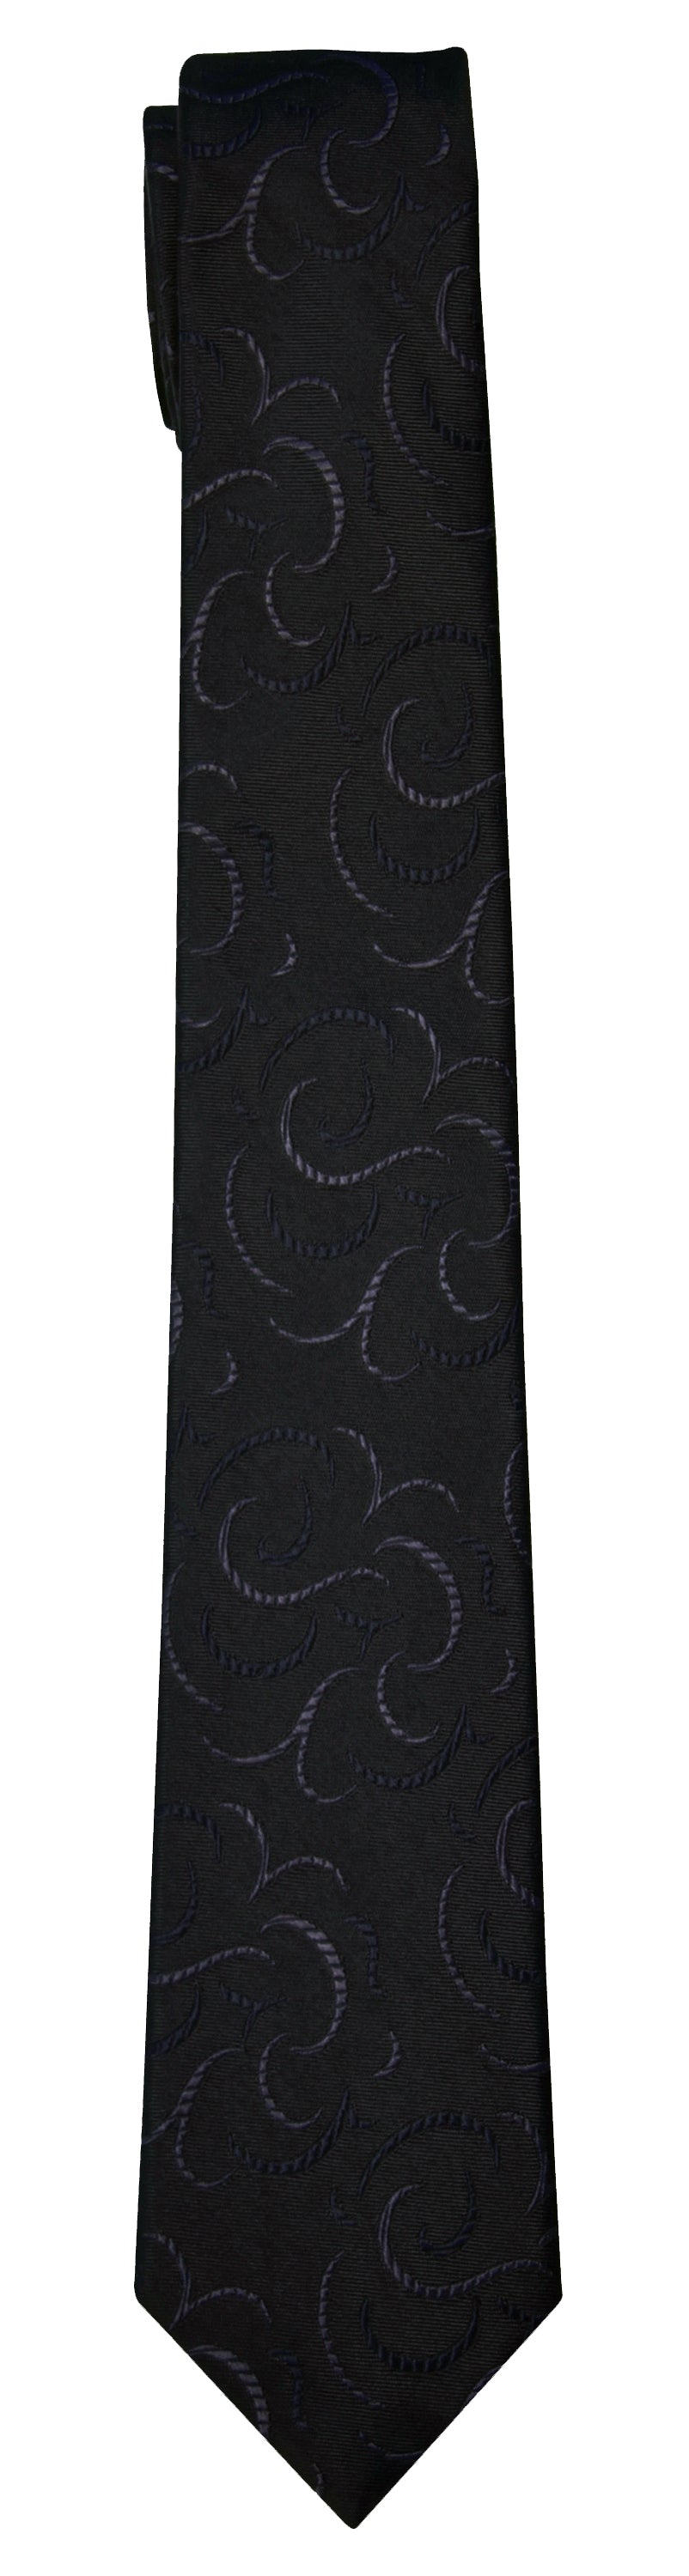 Mimi Fong Silhouette Tie in Black